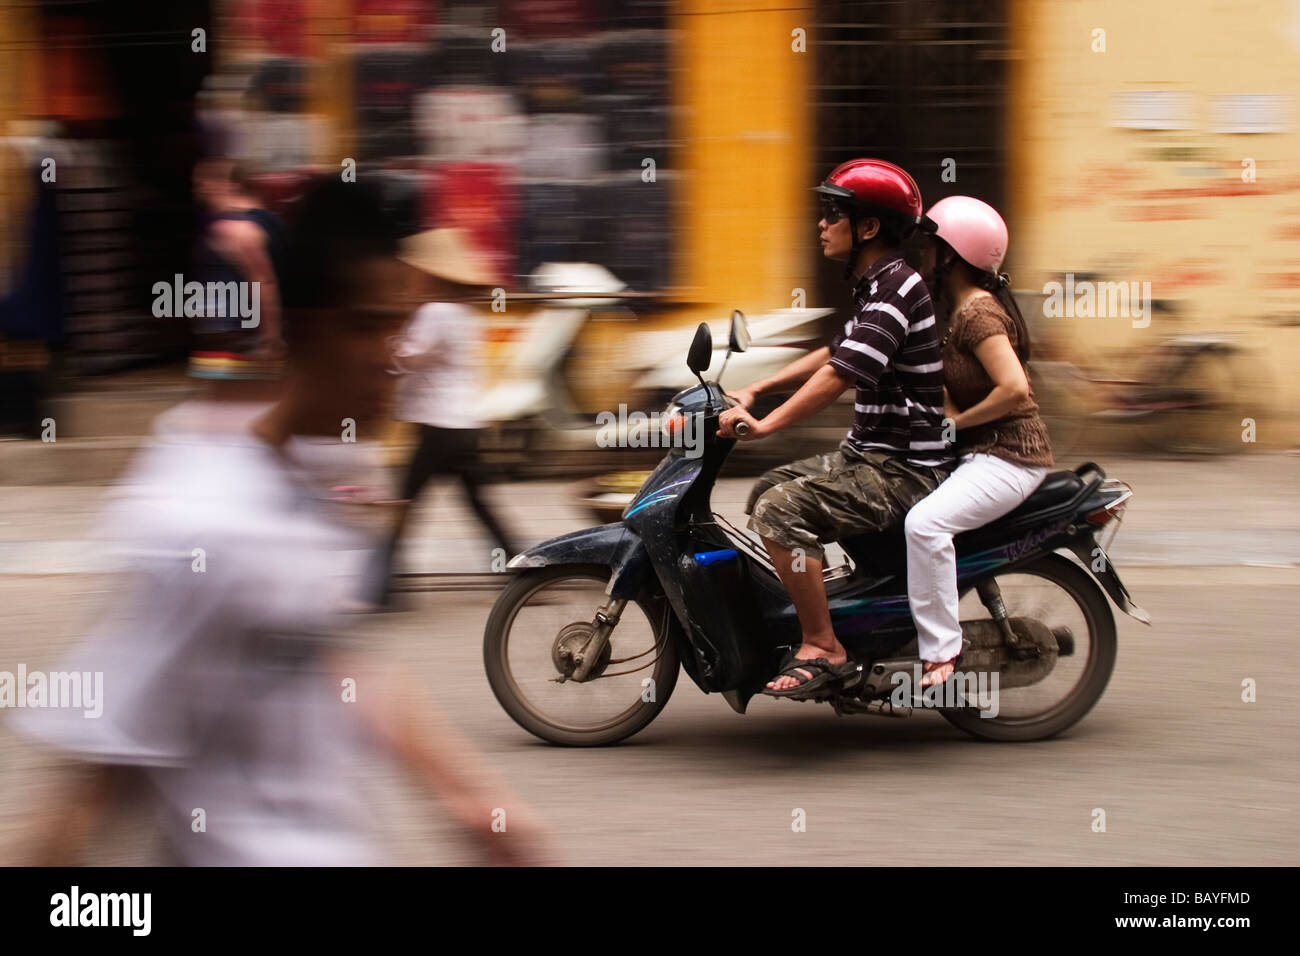 A motorbike whizzes down a street in Hanoi, Socialist Republic of Vietnam. Stock Photo